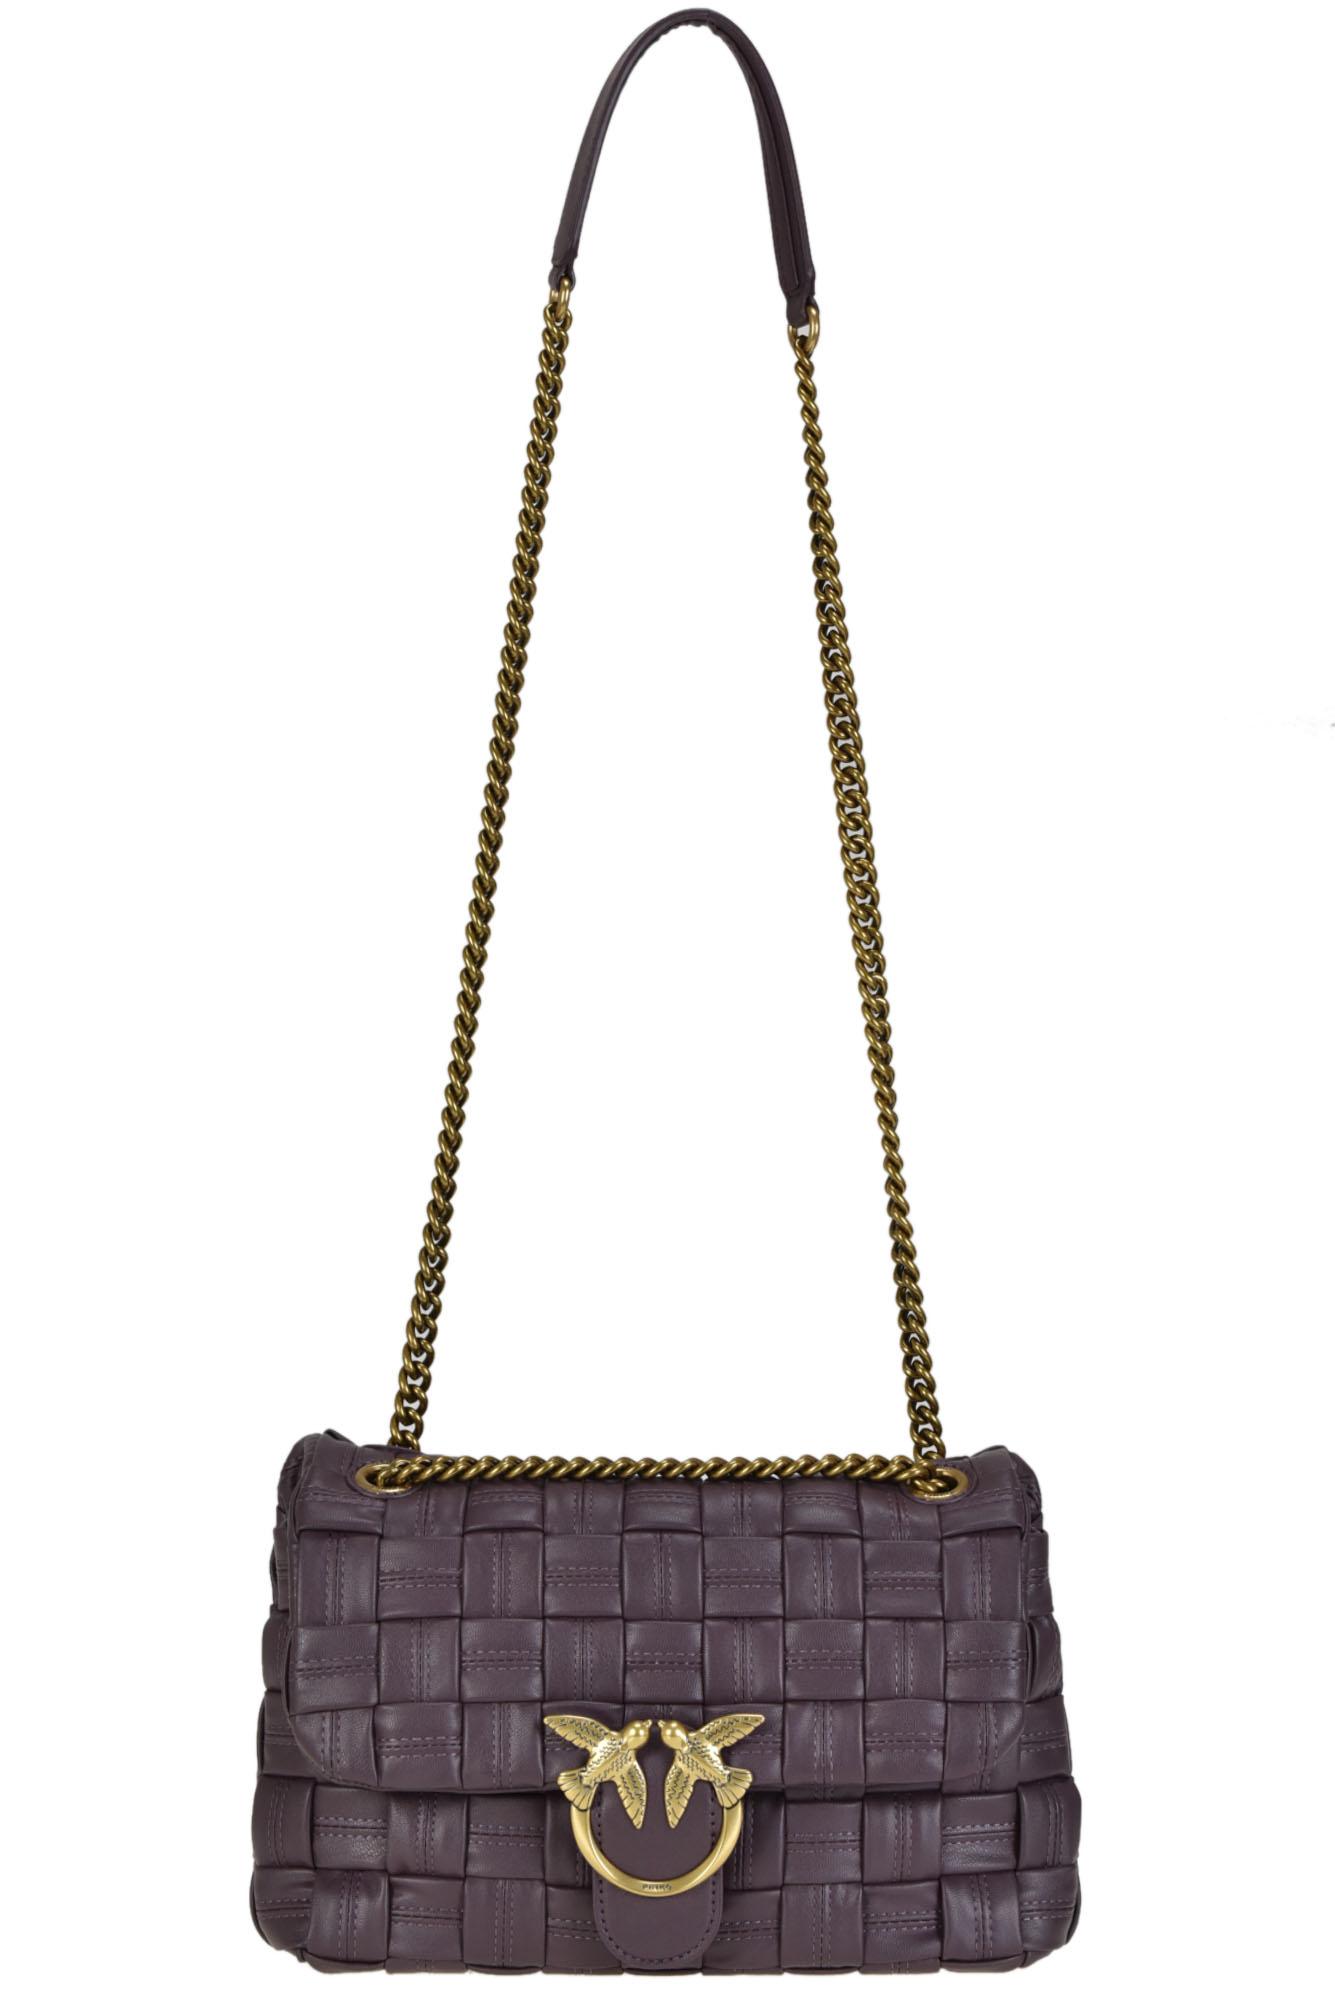 Pinko Leather Love Classic Puff Weave Bag in Plum (Purple) | Lyst